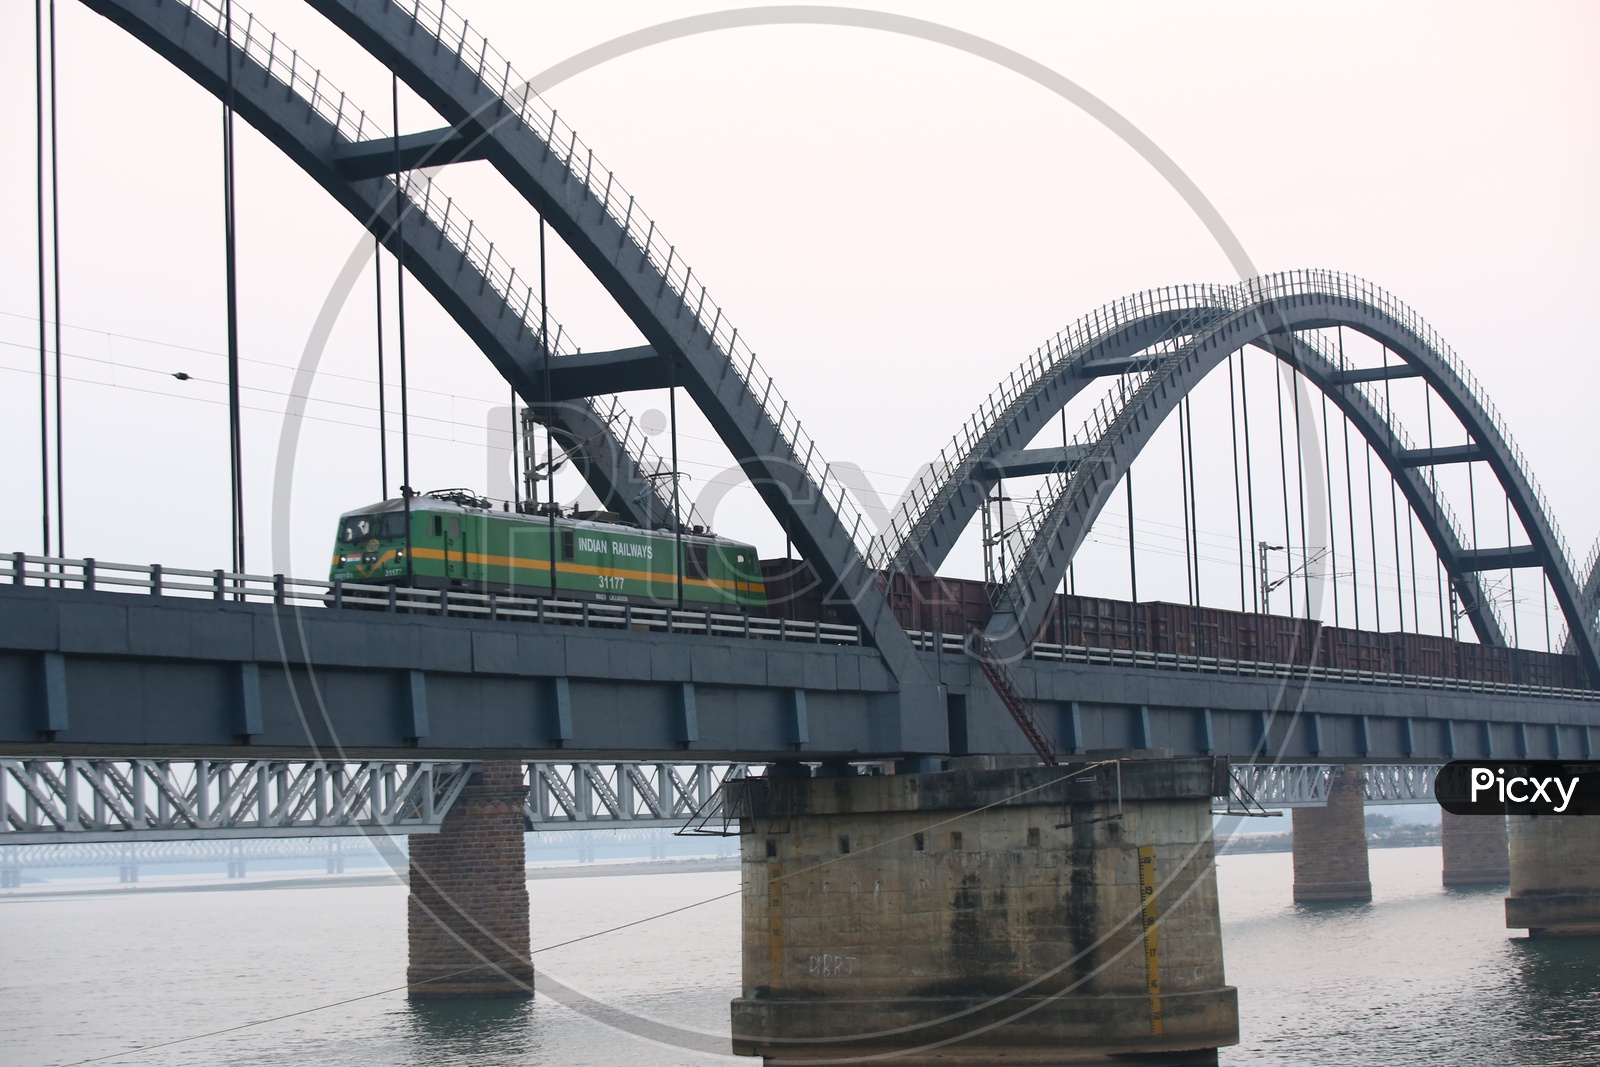 Train on the Arch Bridge  And Fisher boats in River Godavari